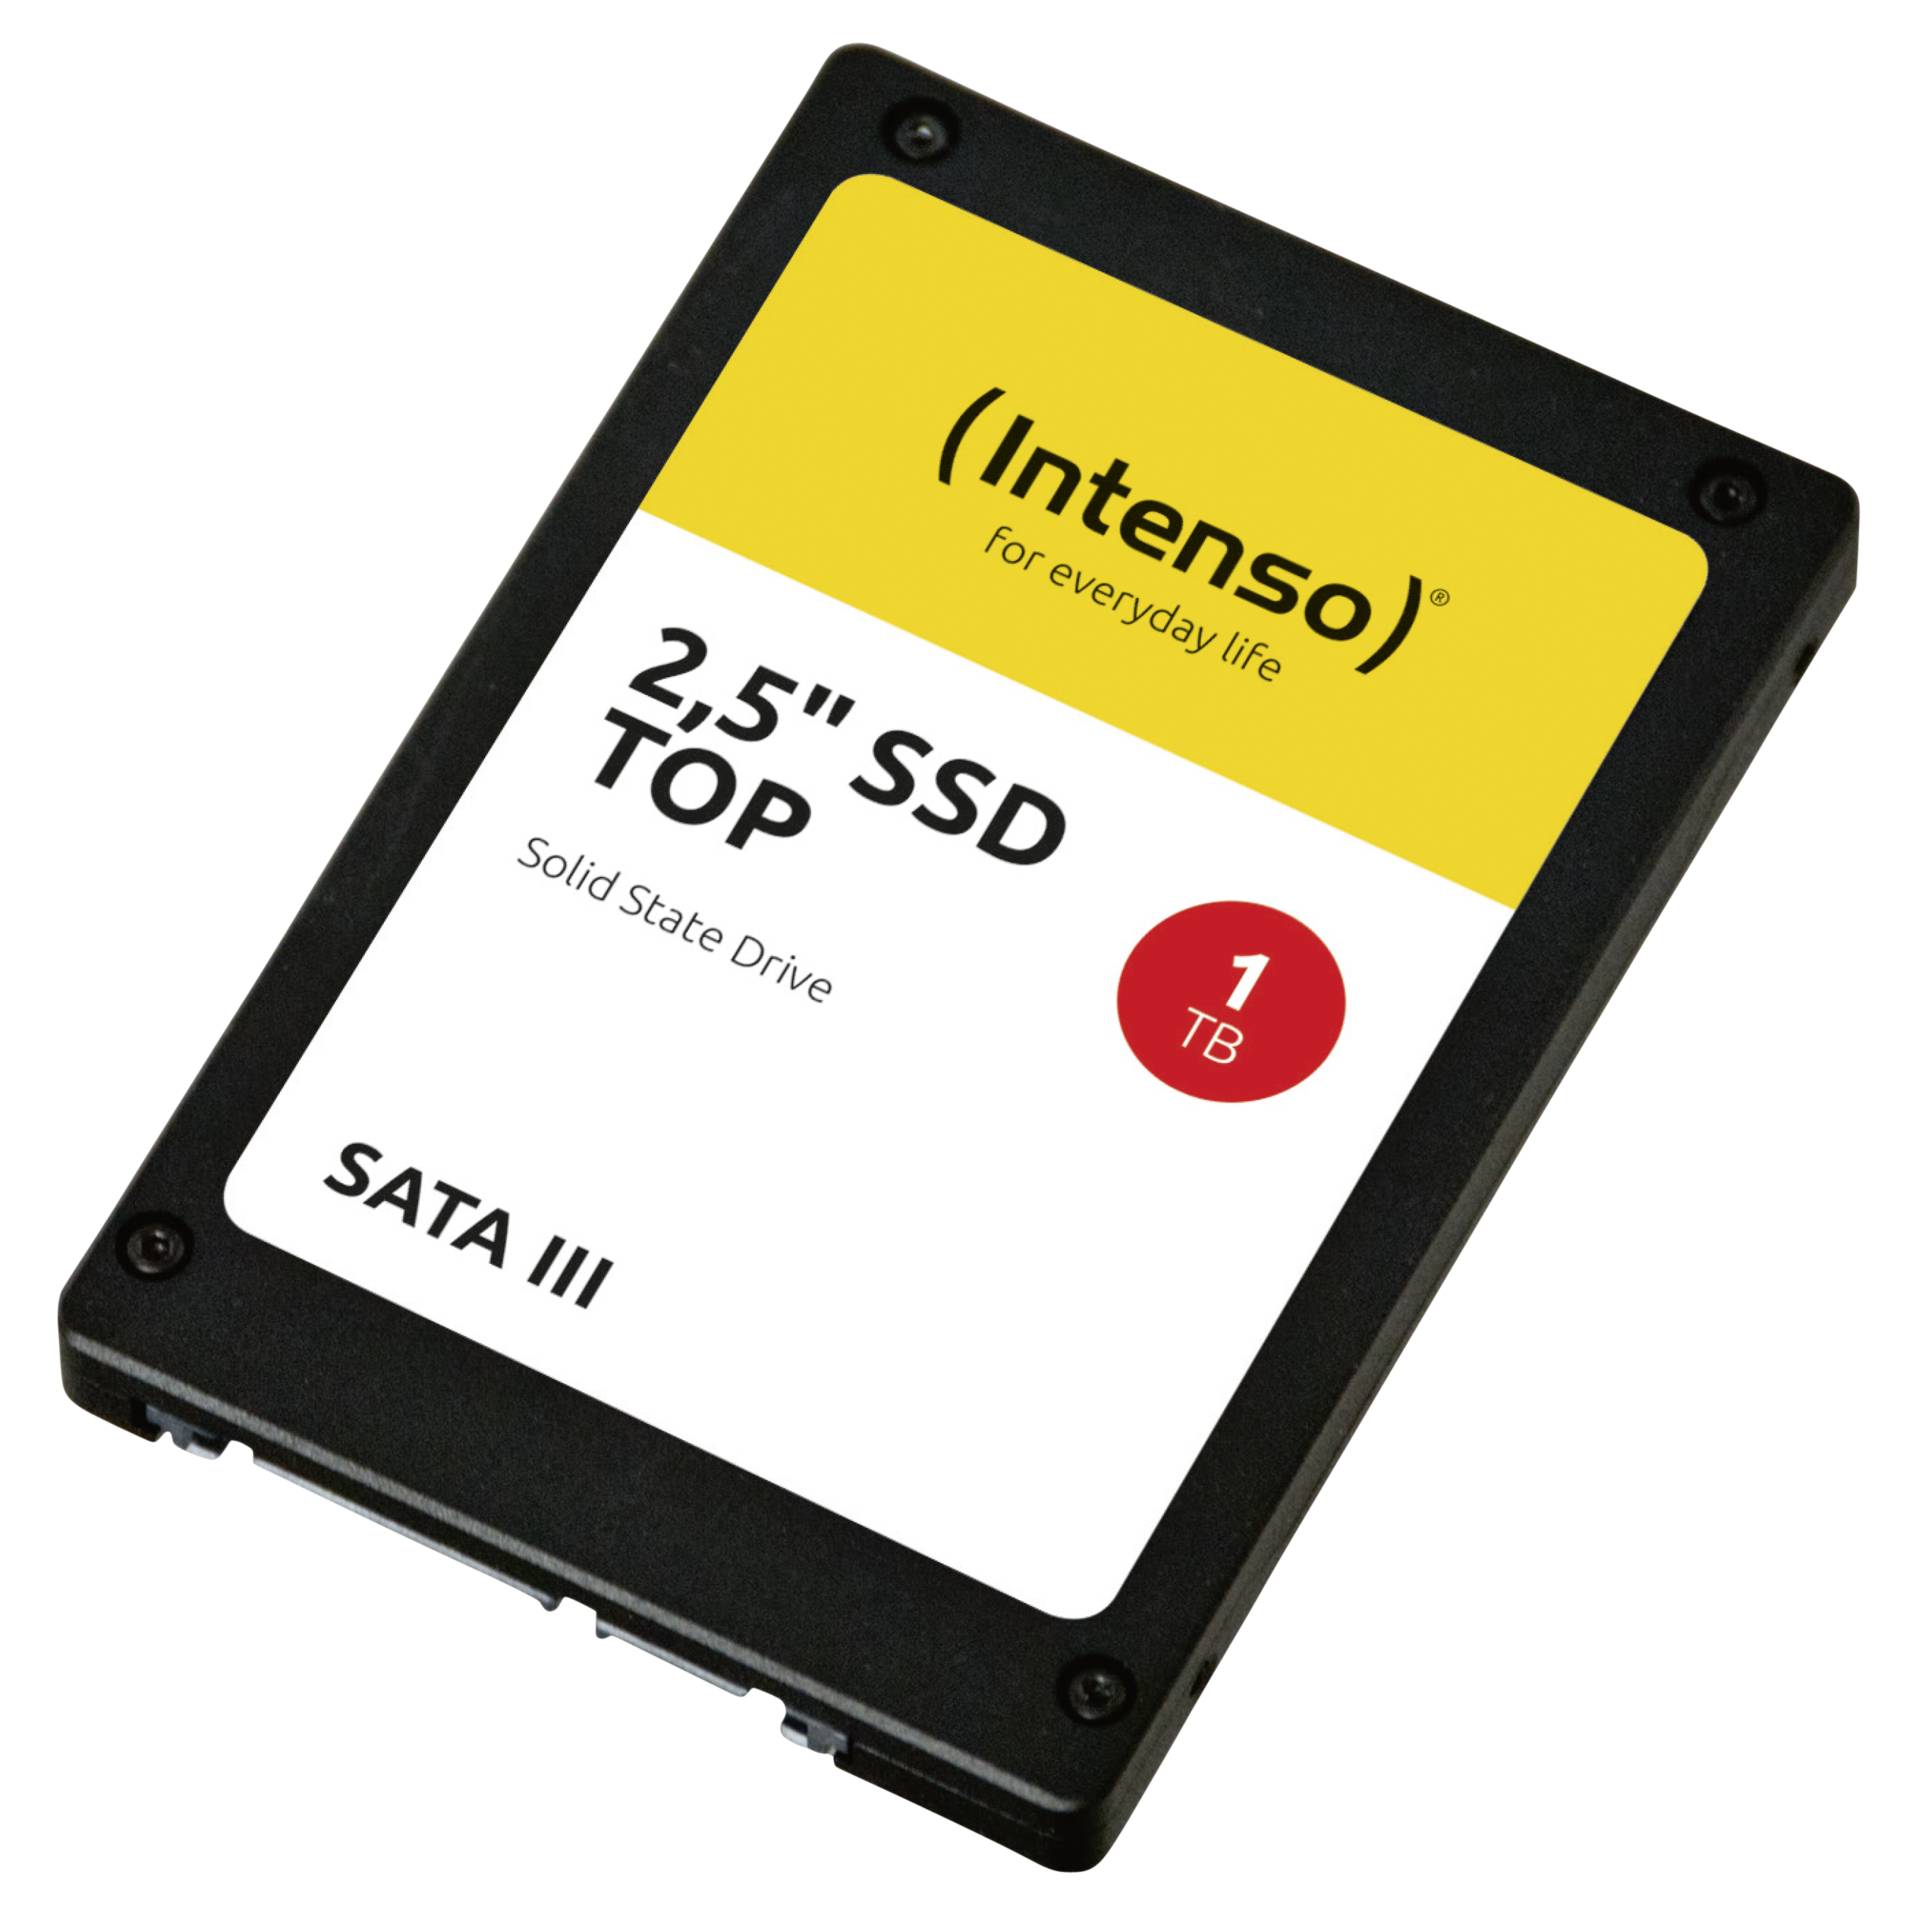 Intenso 2,5  SSD TOP         1TB SATA III